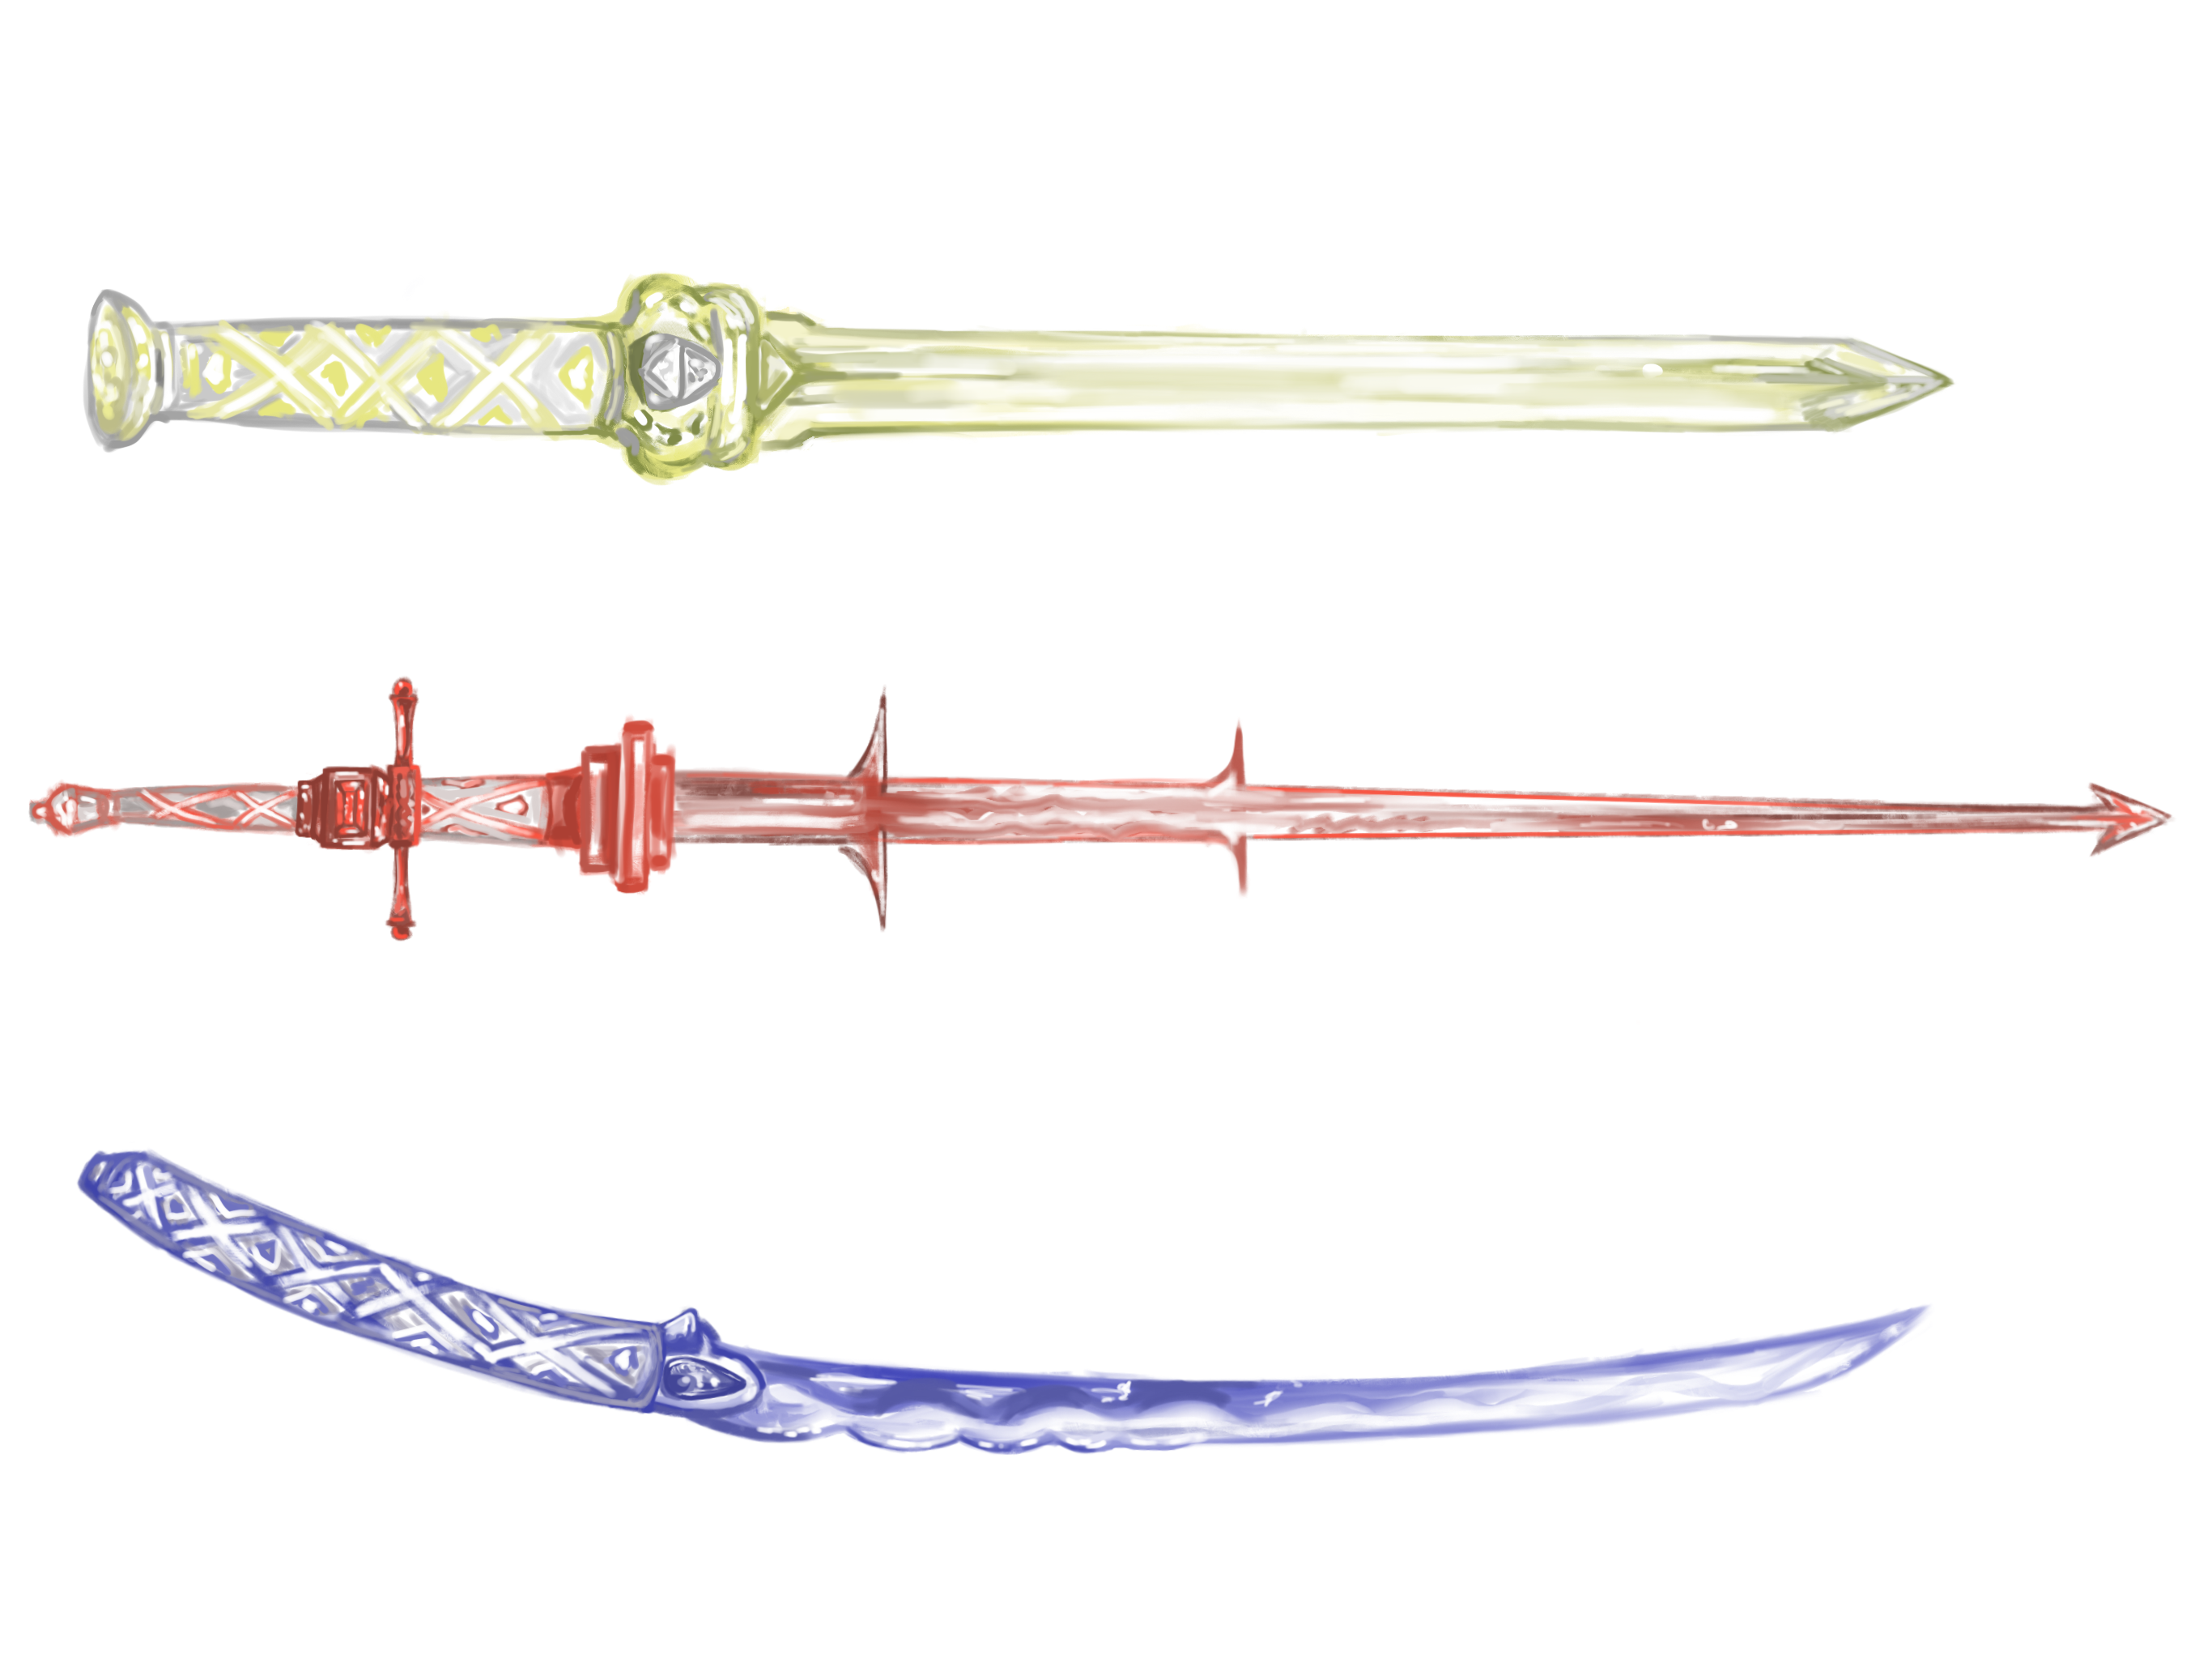 Updated Sword Concepts